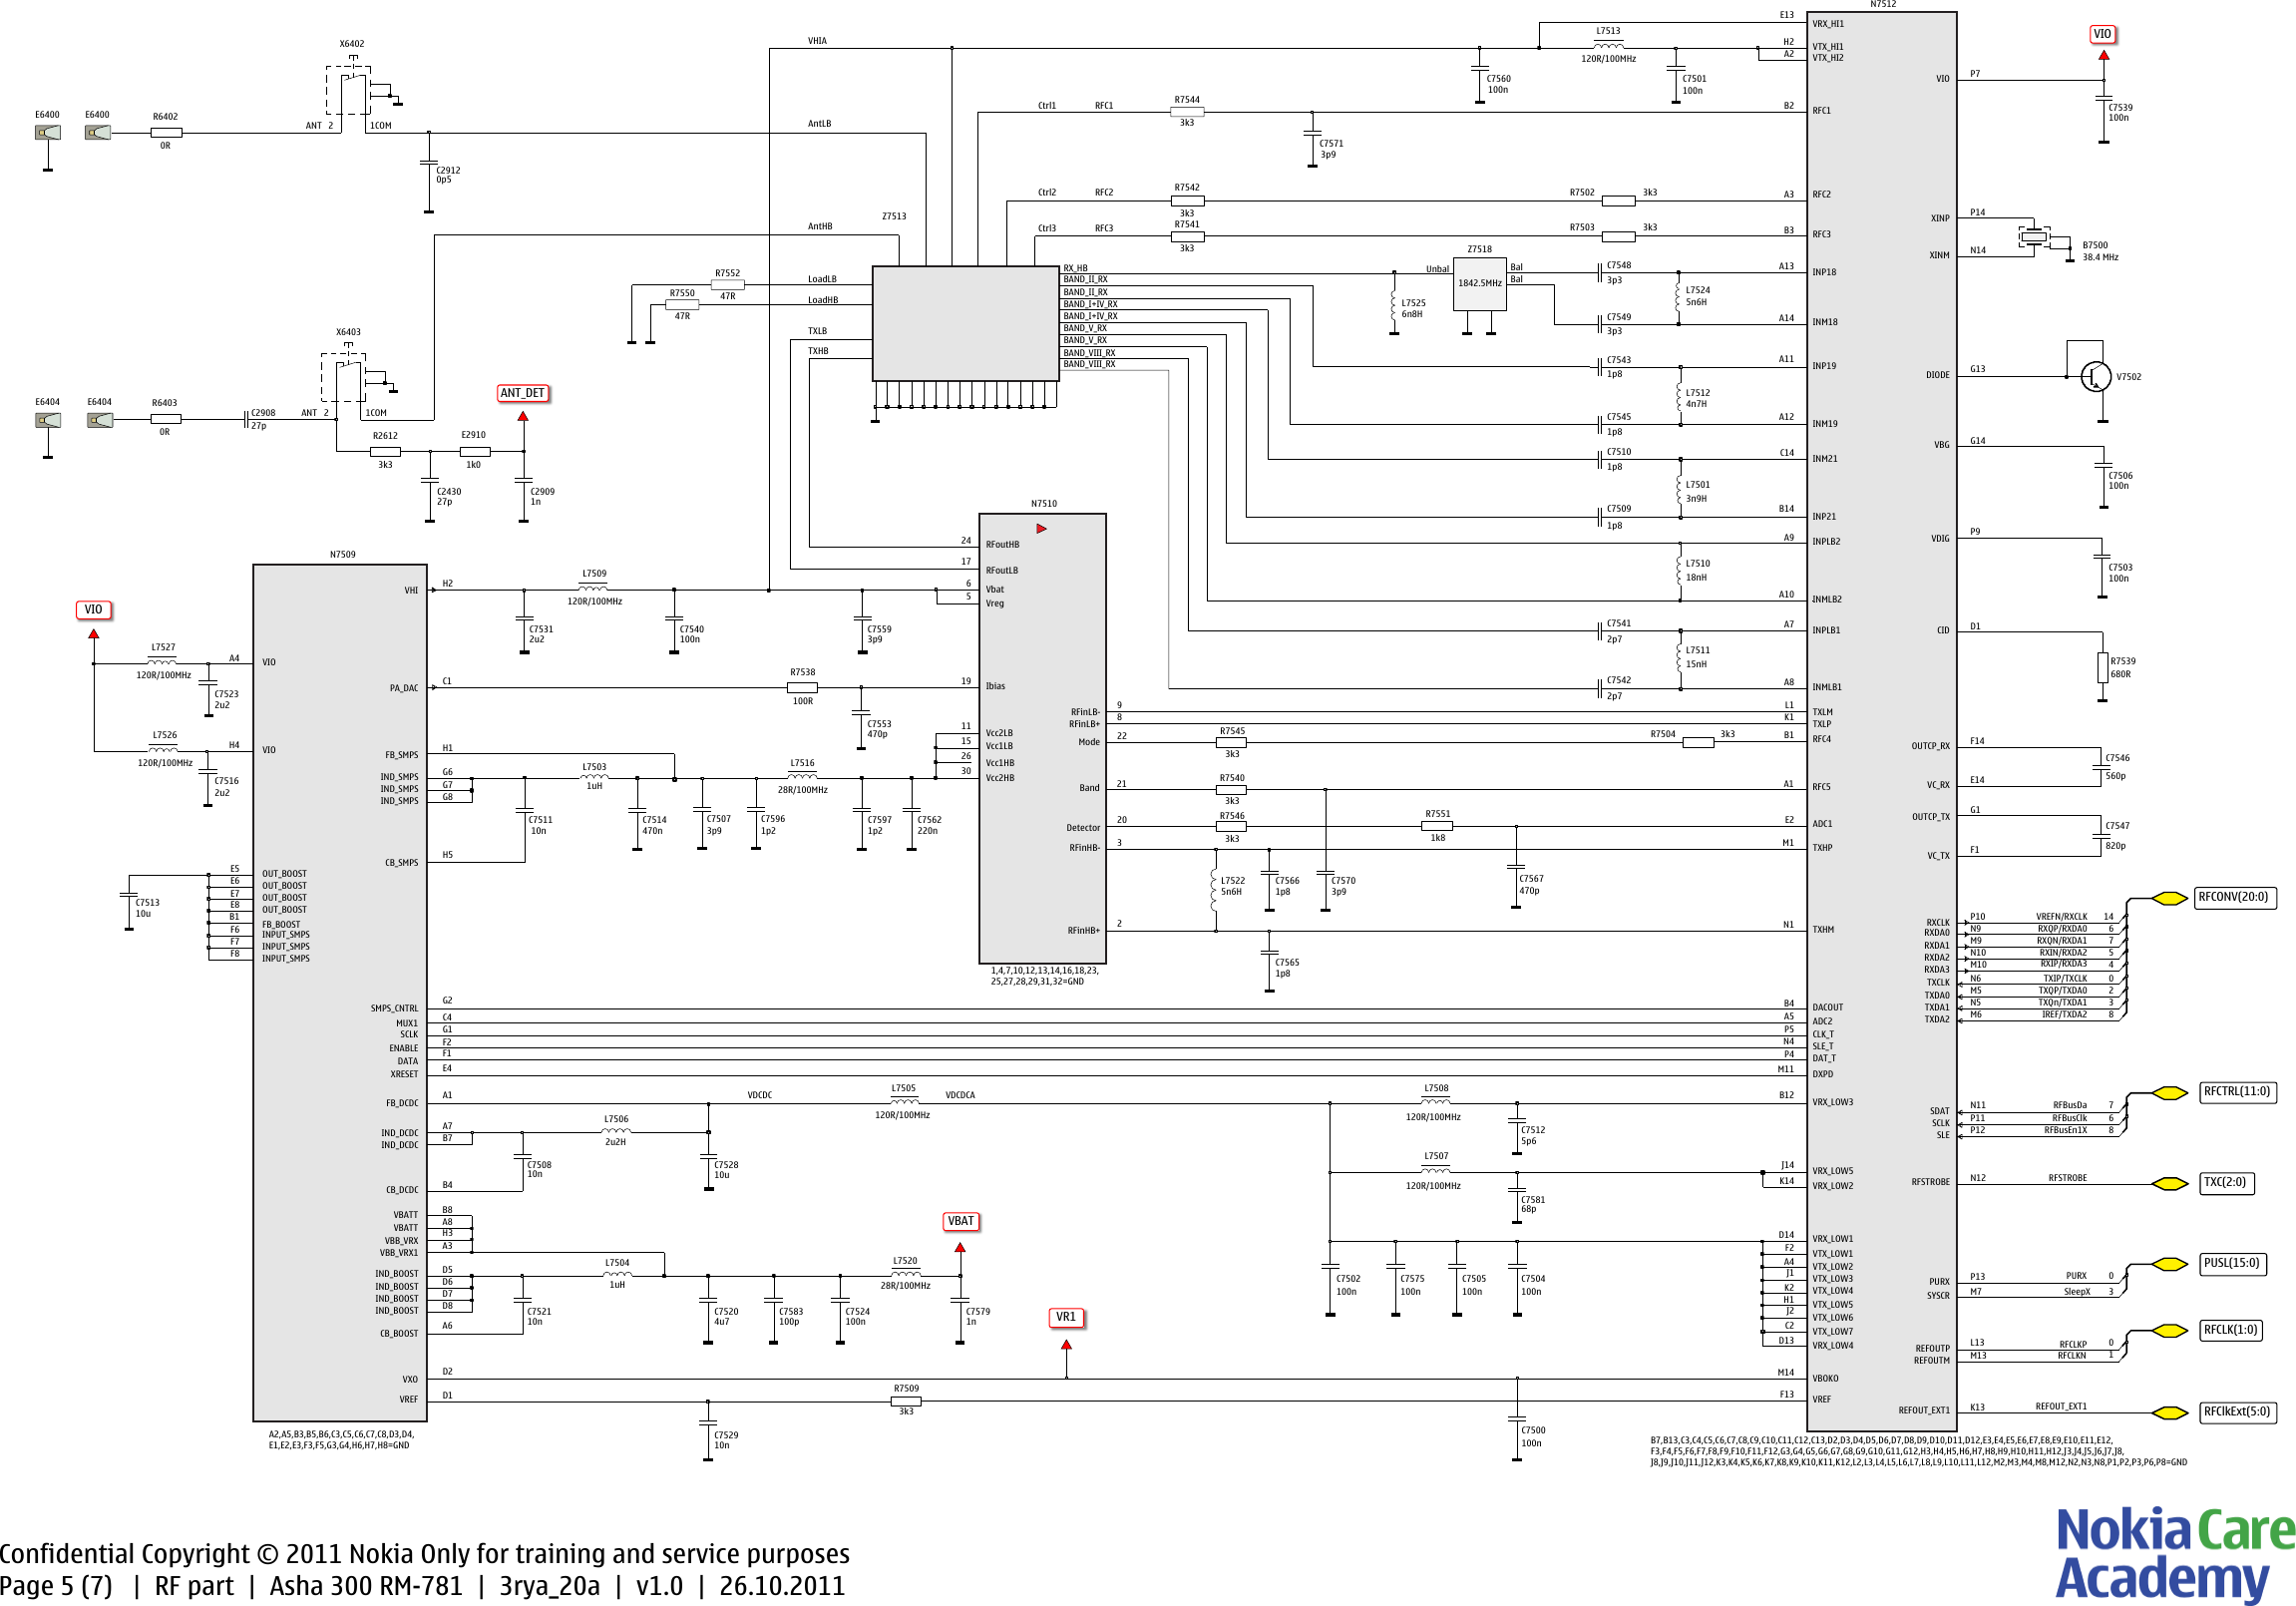 Page 5 of 8 - Nokia Asha 300 RM-781 - Service Schematics. Www.s-manuals.com. Schematics V1.0